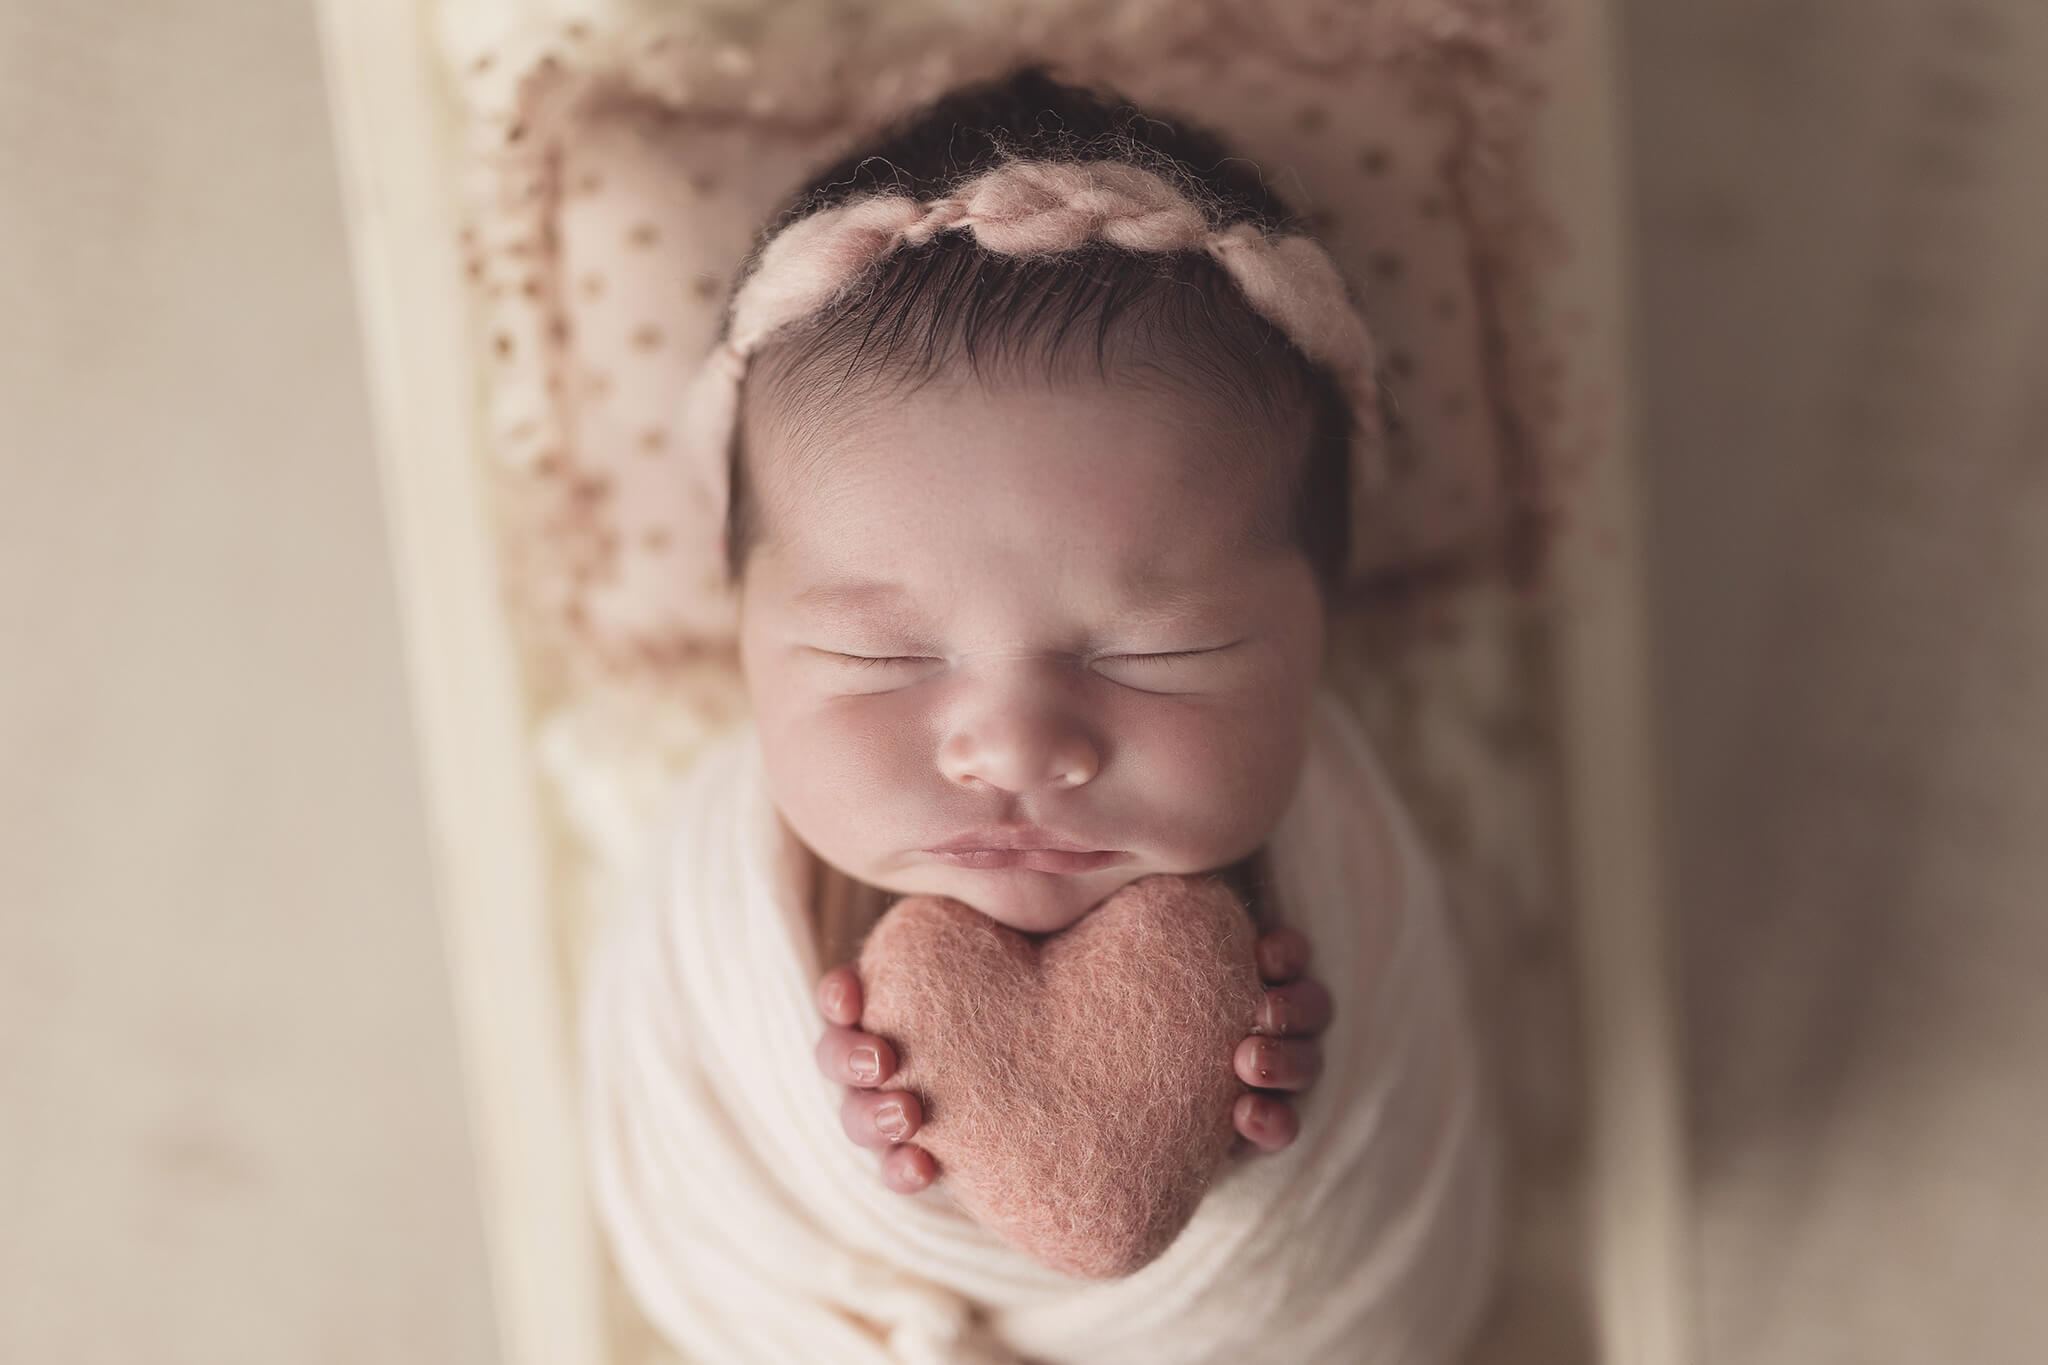 newborn holding felt heart with felt headband